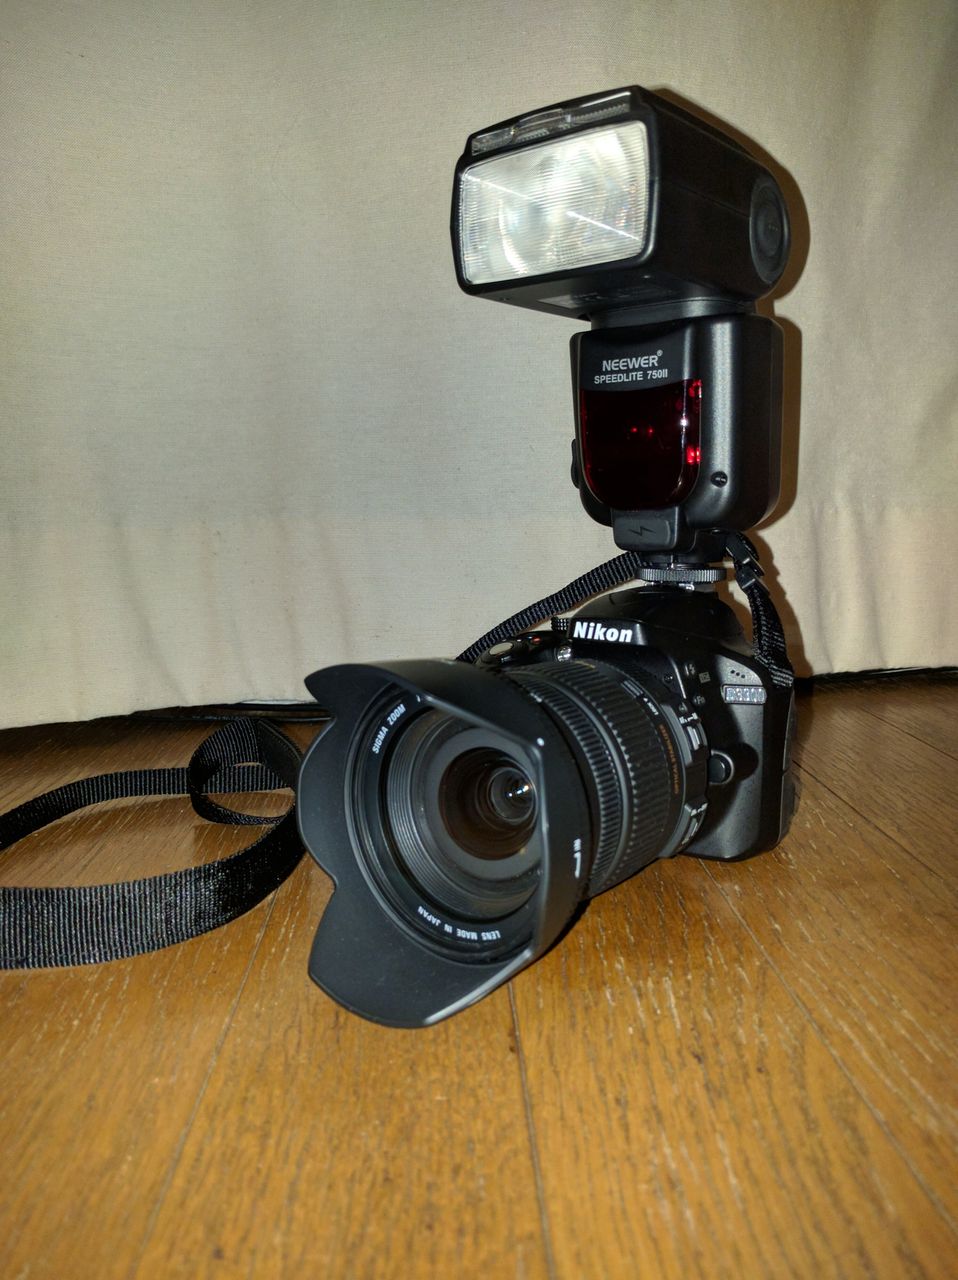 Nikon D3300 Sigma 17 50mm F2 8 Ex Dc Os Hsm Neewer Speedlite 750ii S Abine